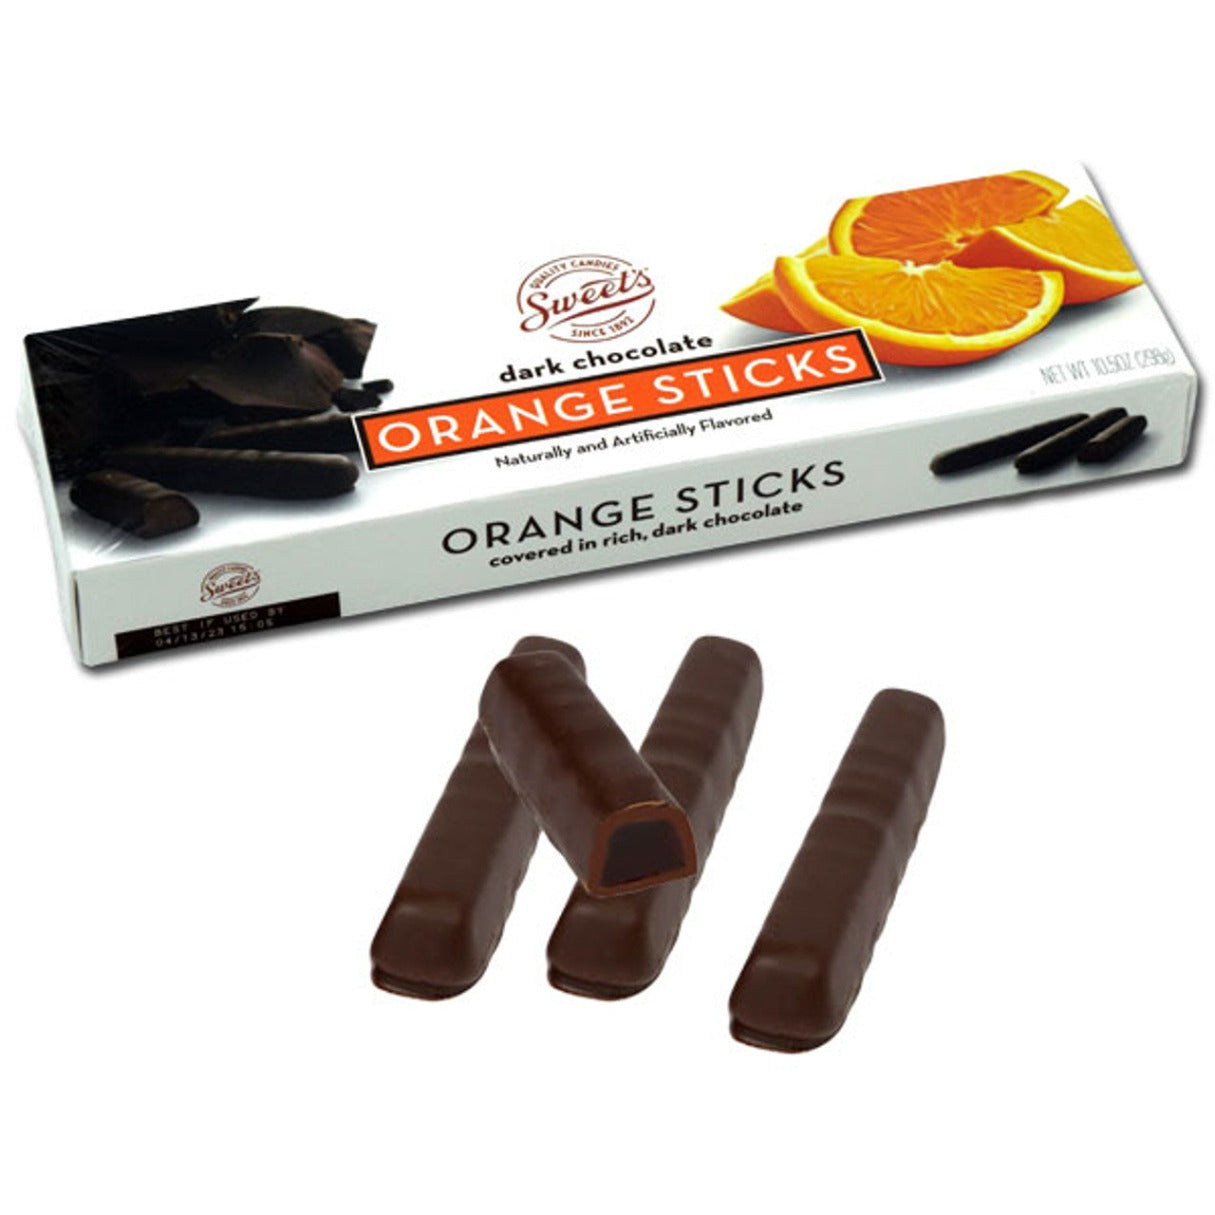 Dark Chocolate Sticks Orange 10.5oz - 12ct